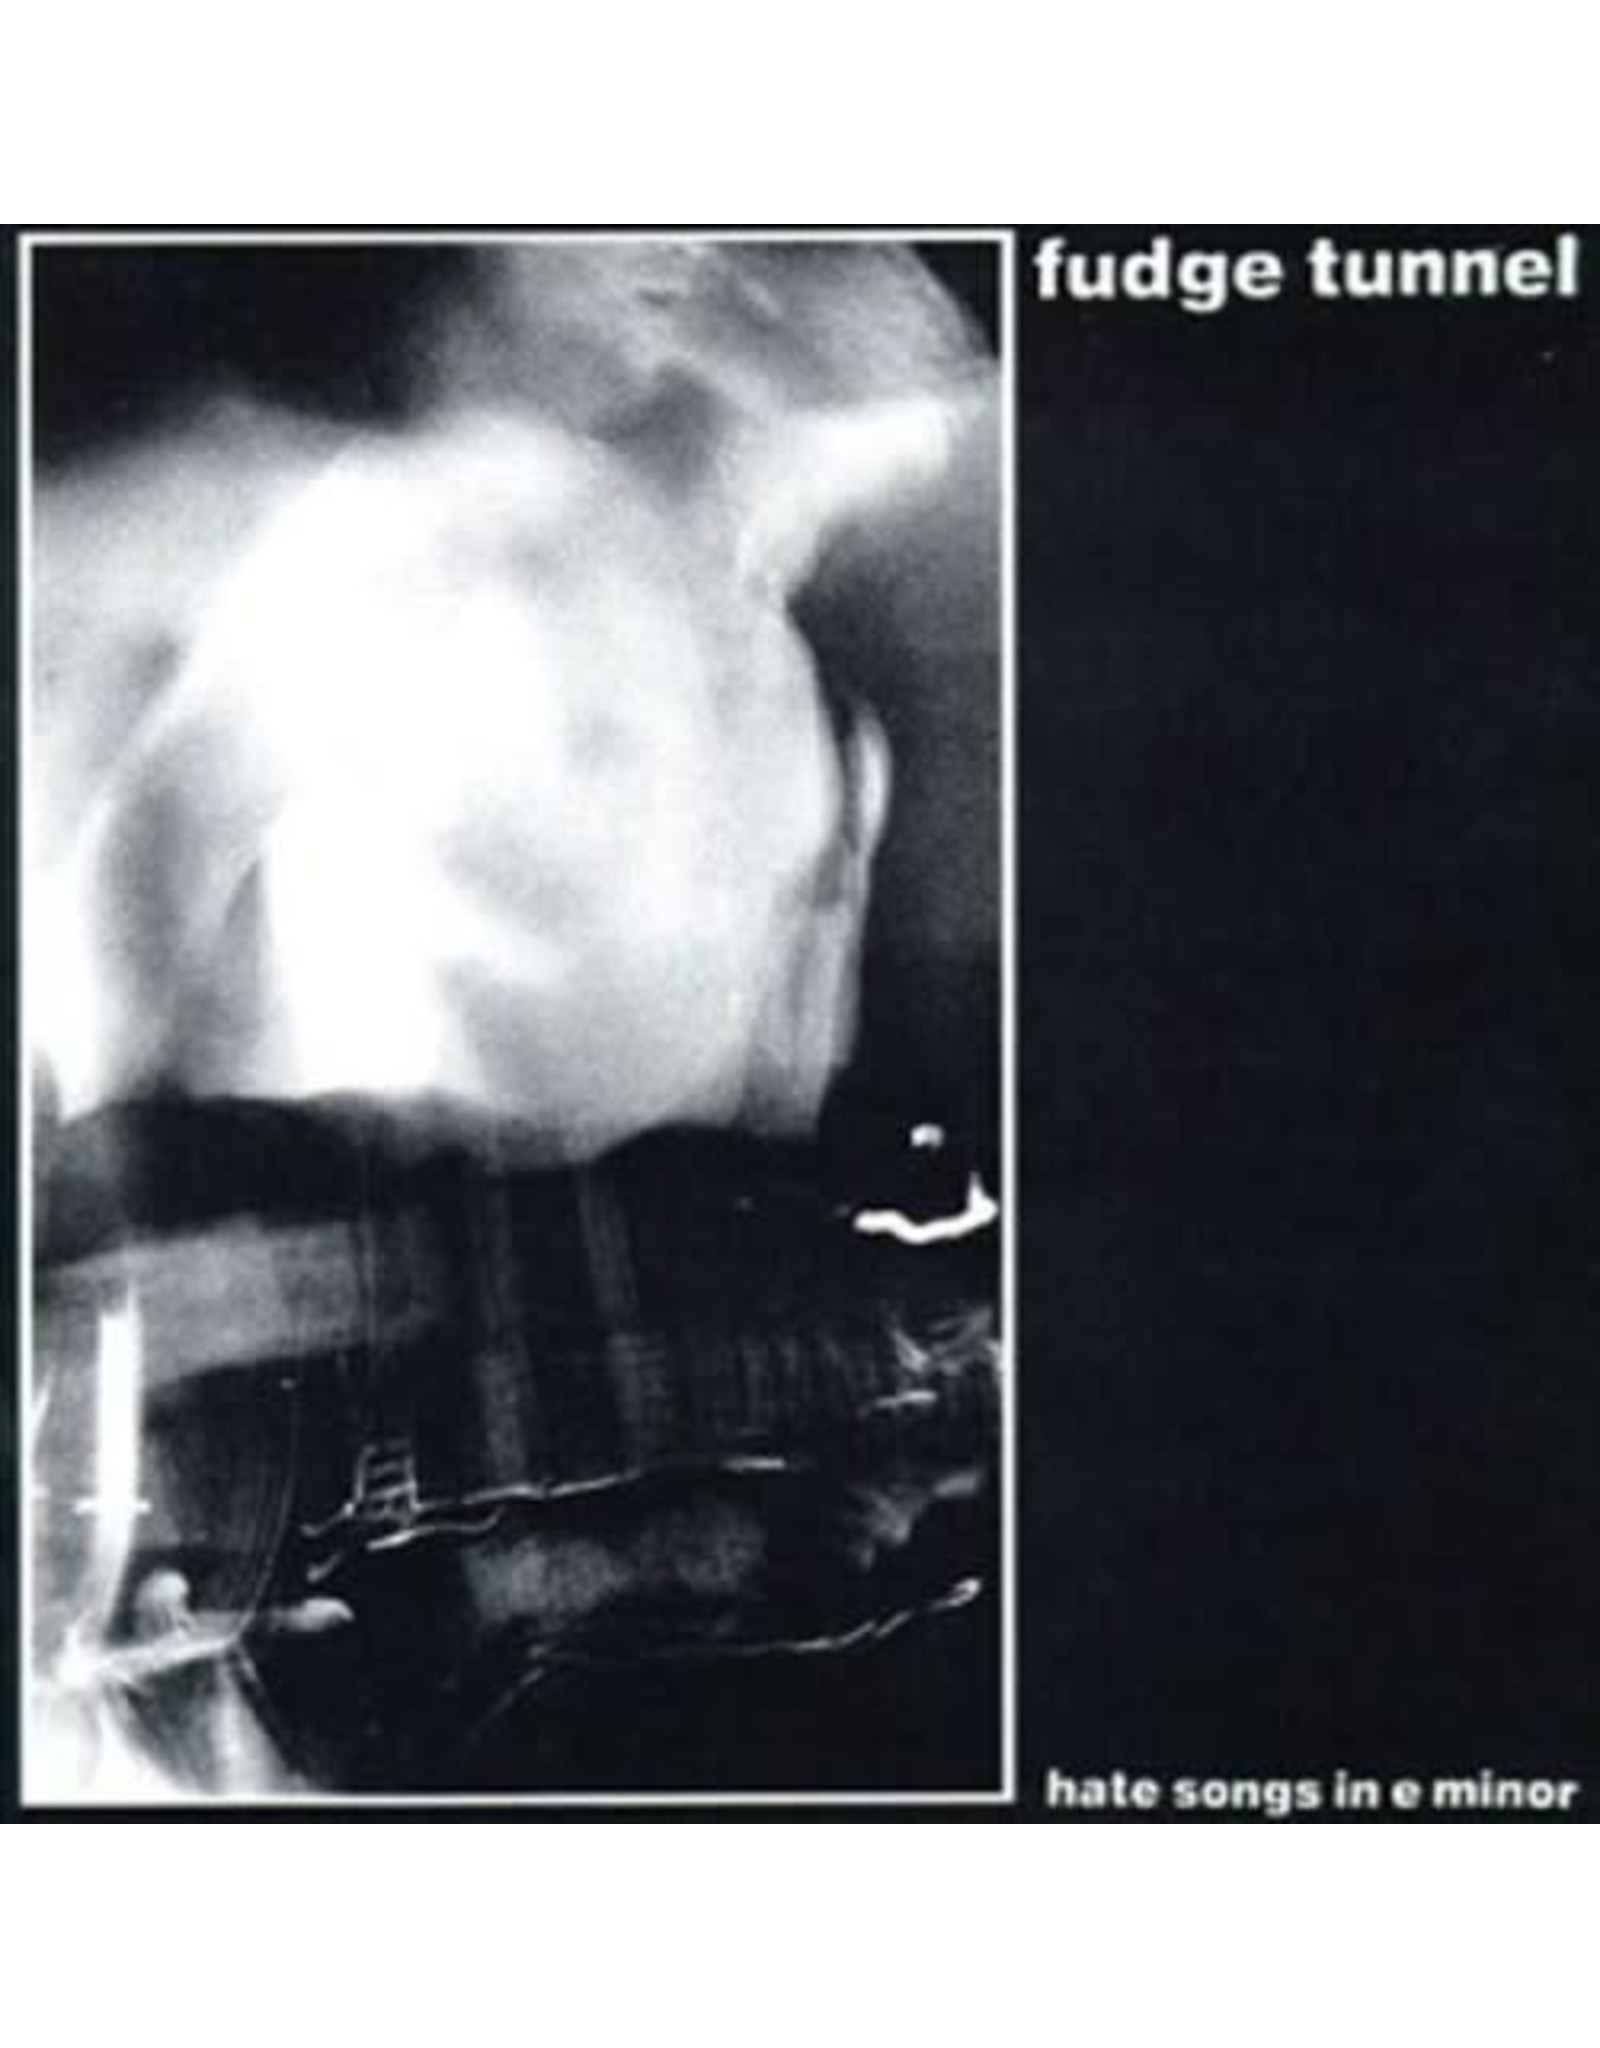 New Vinyl Fudge Tunnel - Hate Songs In E Minor LP